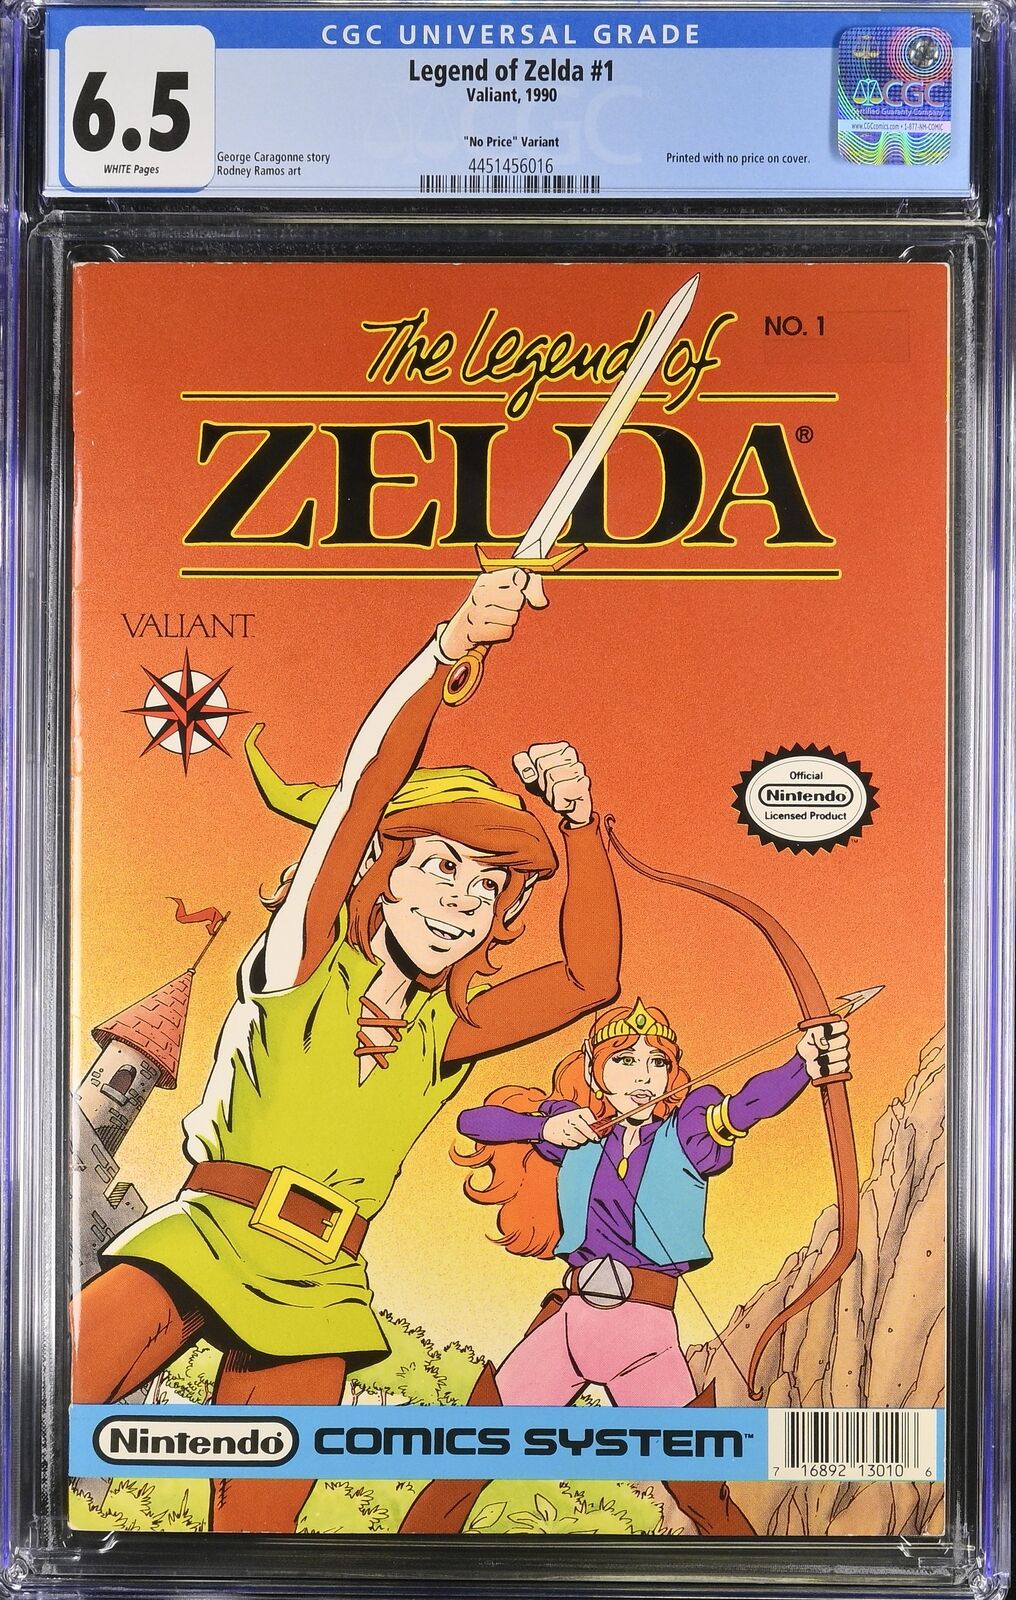 Legend of Zelda #1 - Valiant 1990 CGC 6.5 Printed with no price on cover.